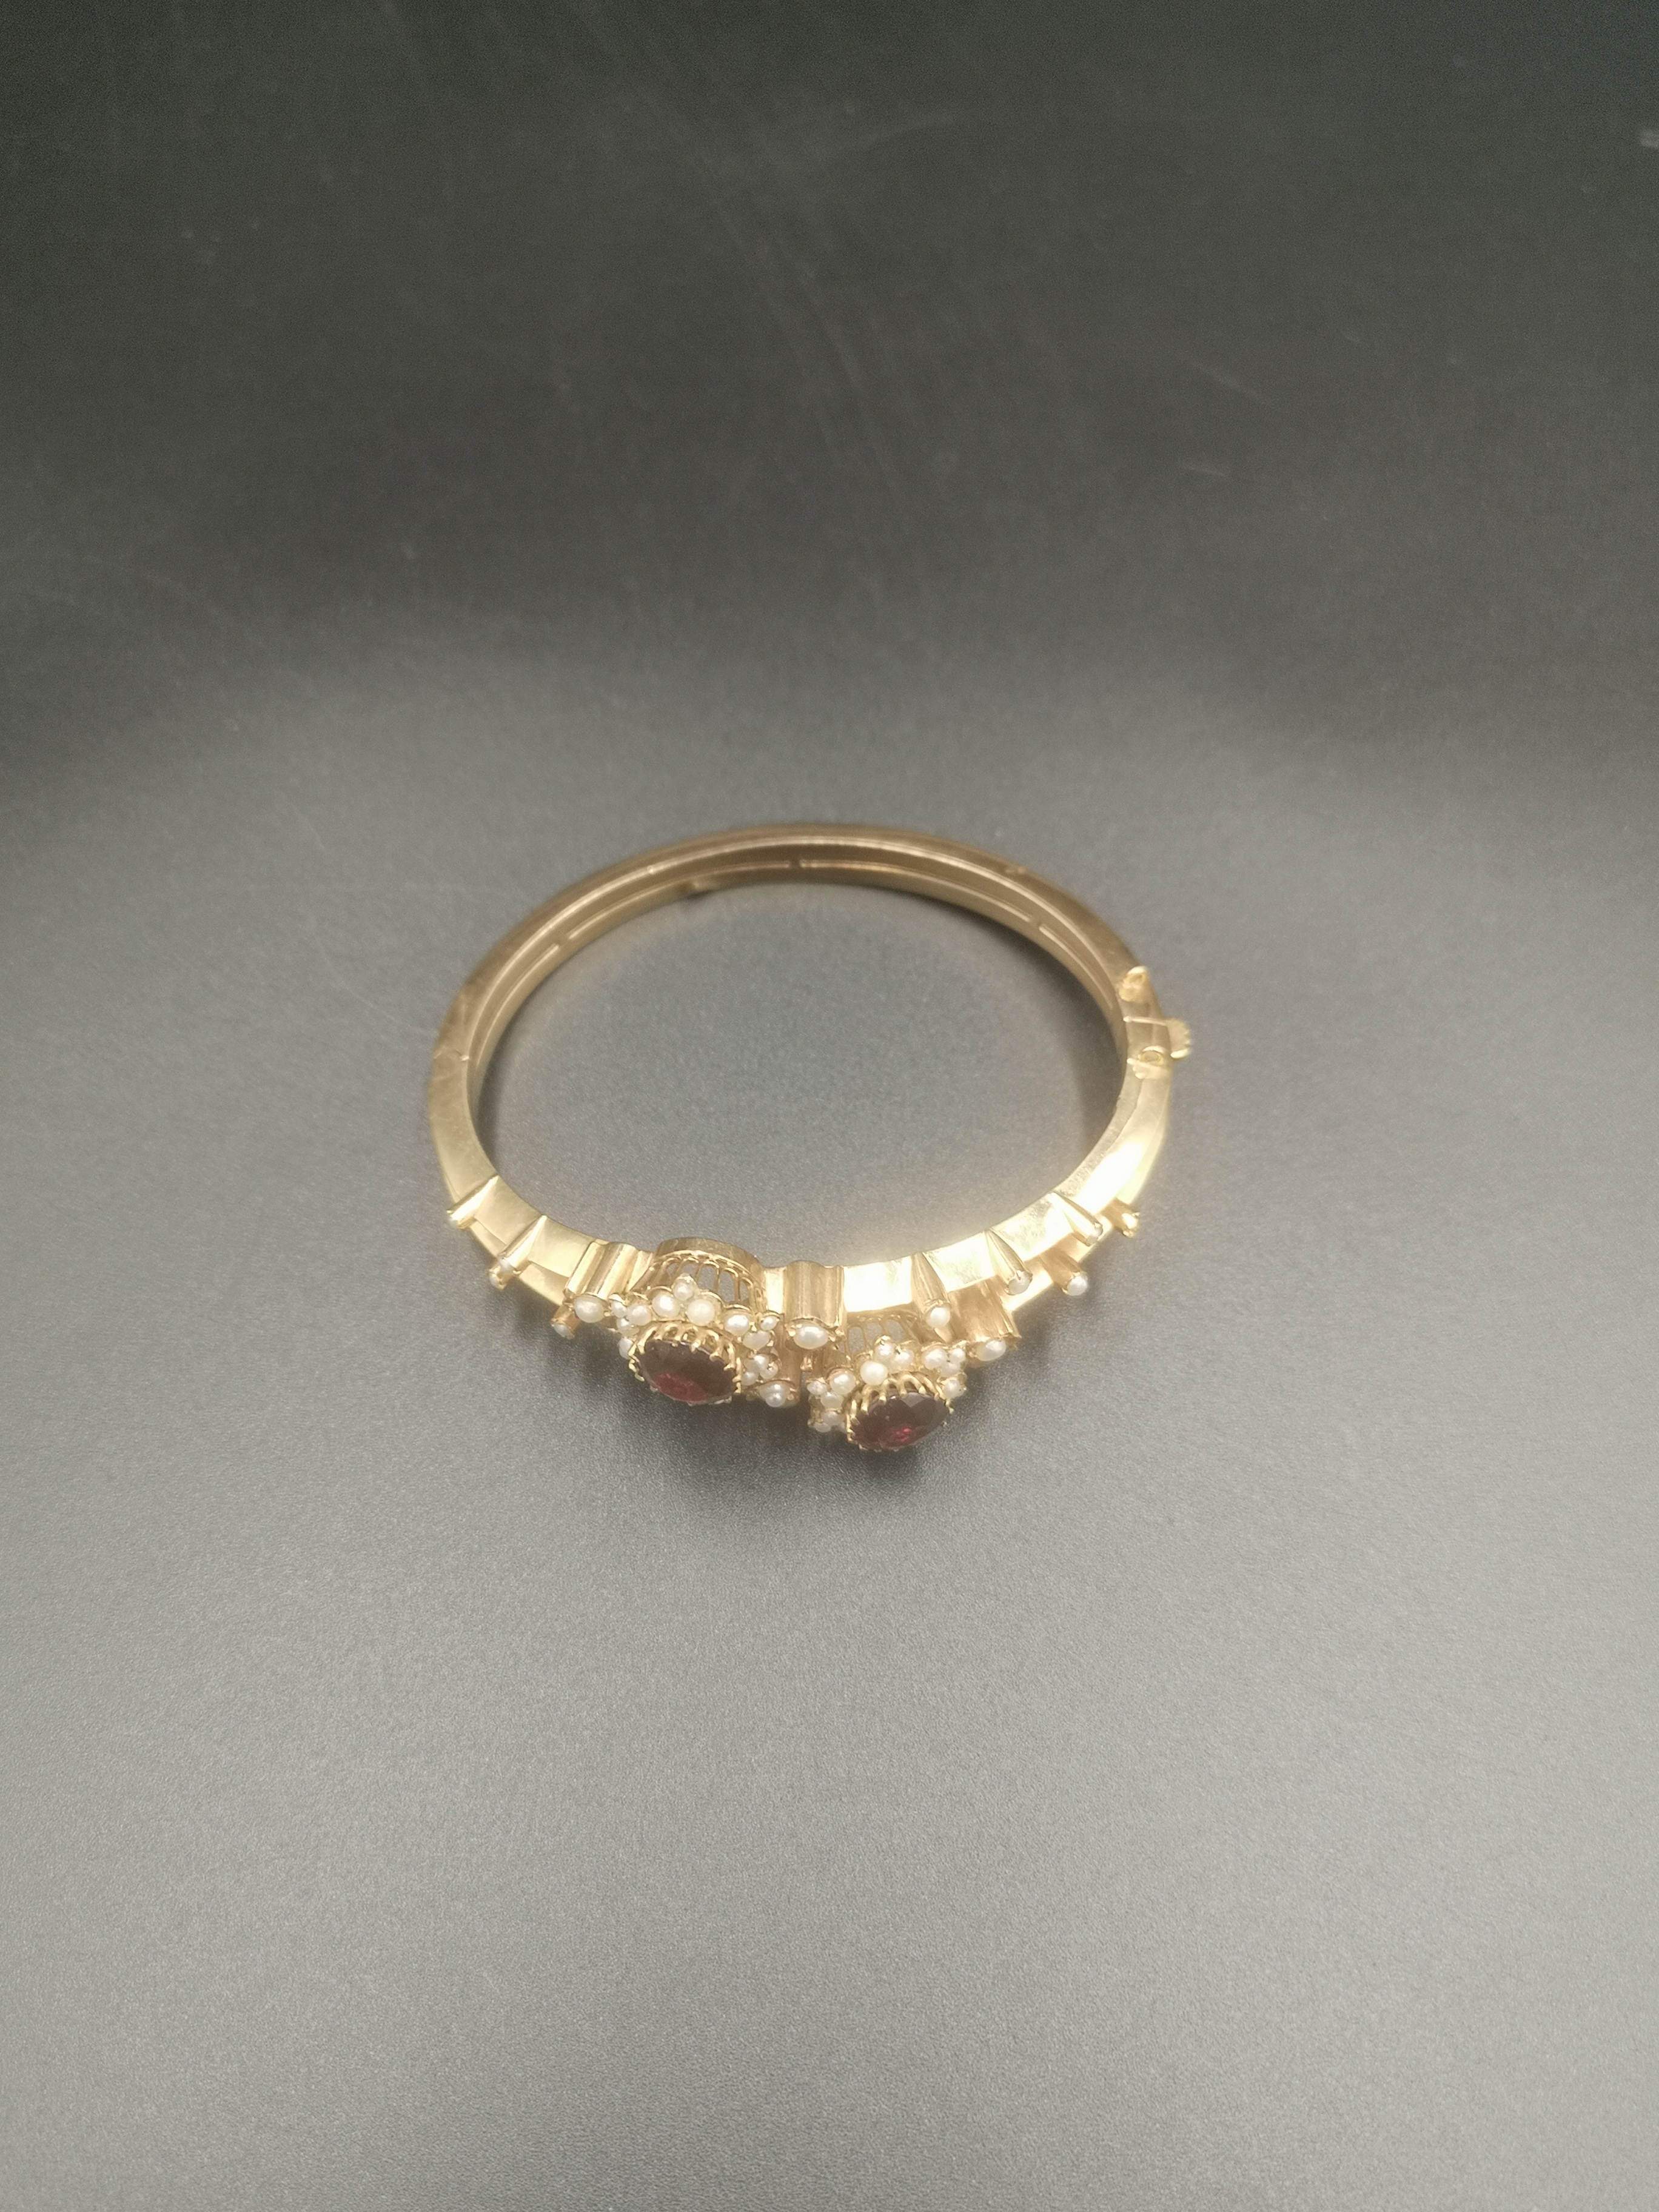 Yellow metal bangle set with garnets and pearls - Image 4 of 4